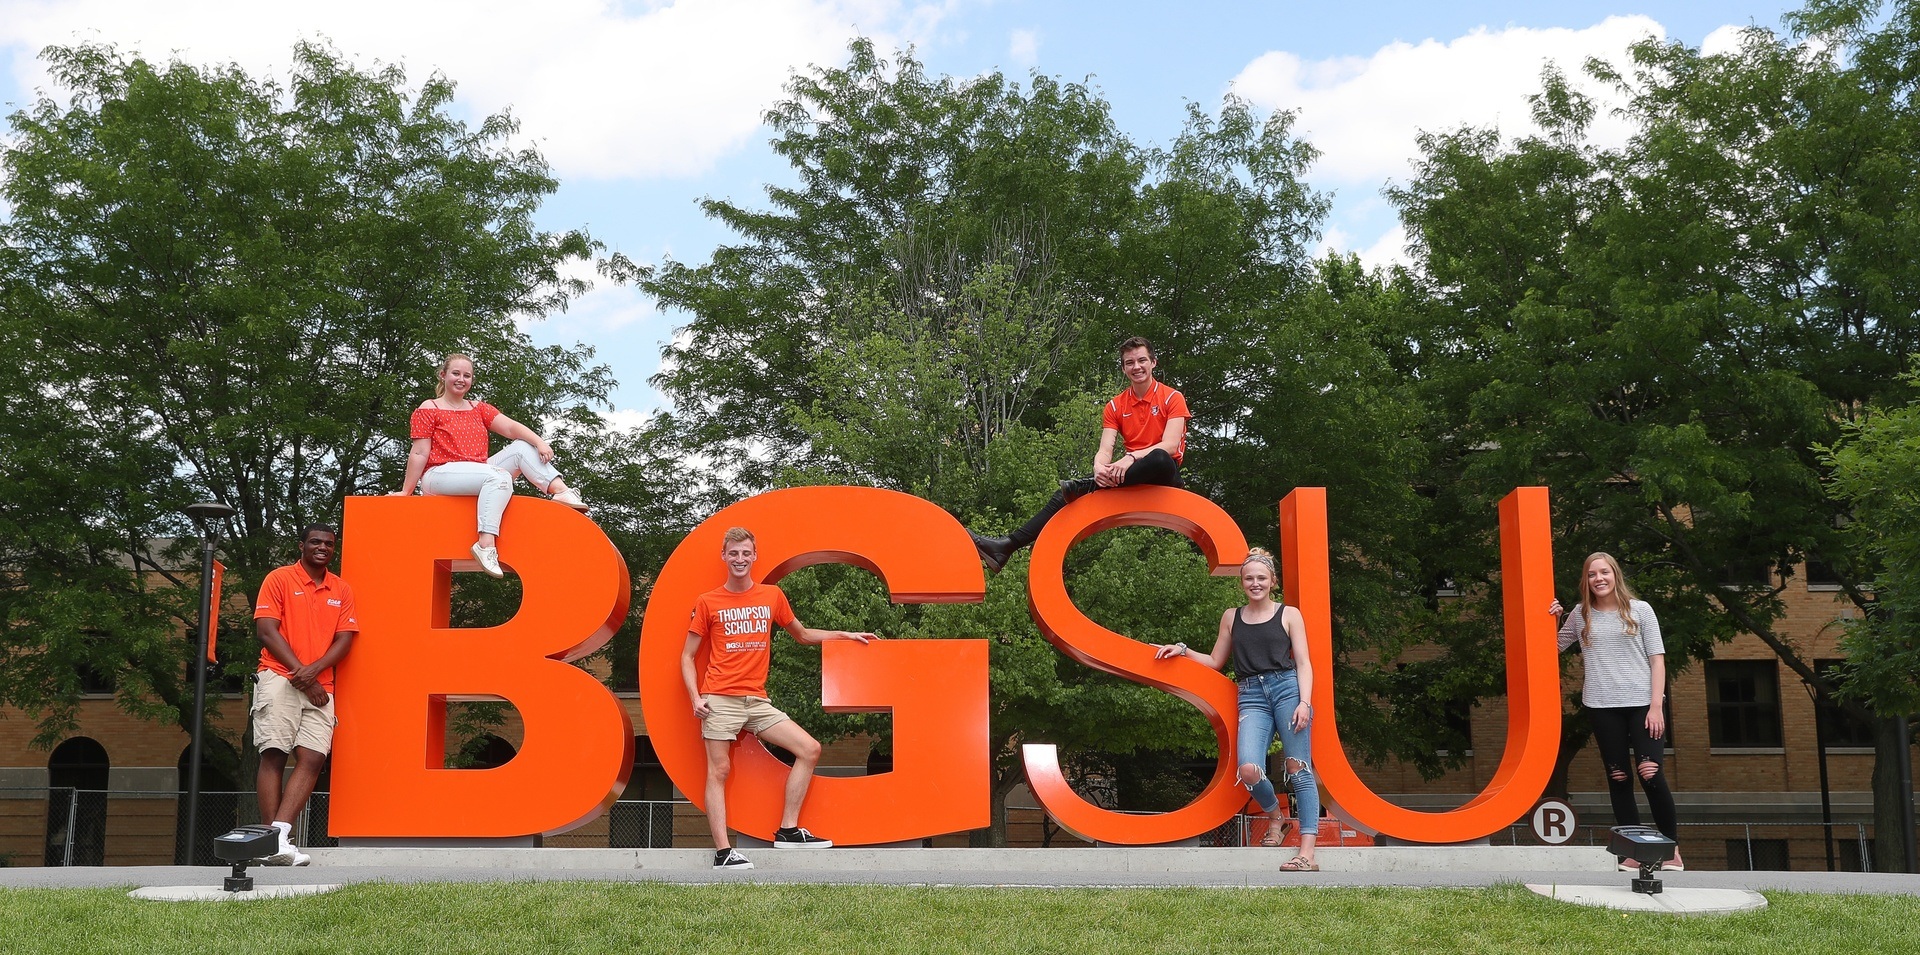 bgsu sign and students image